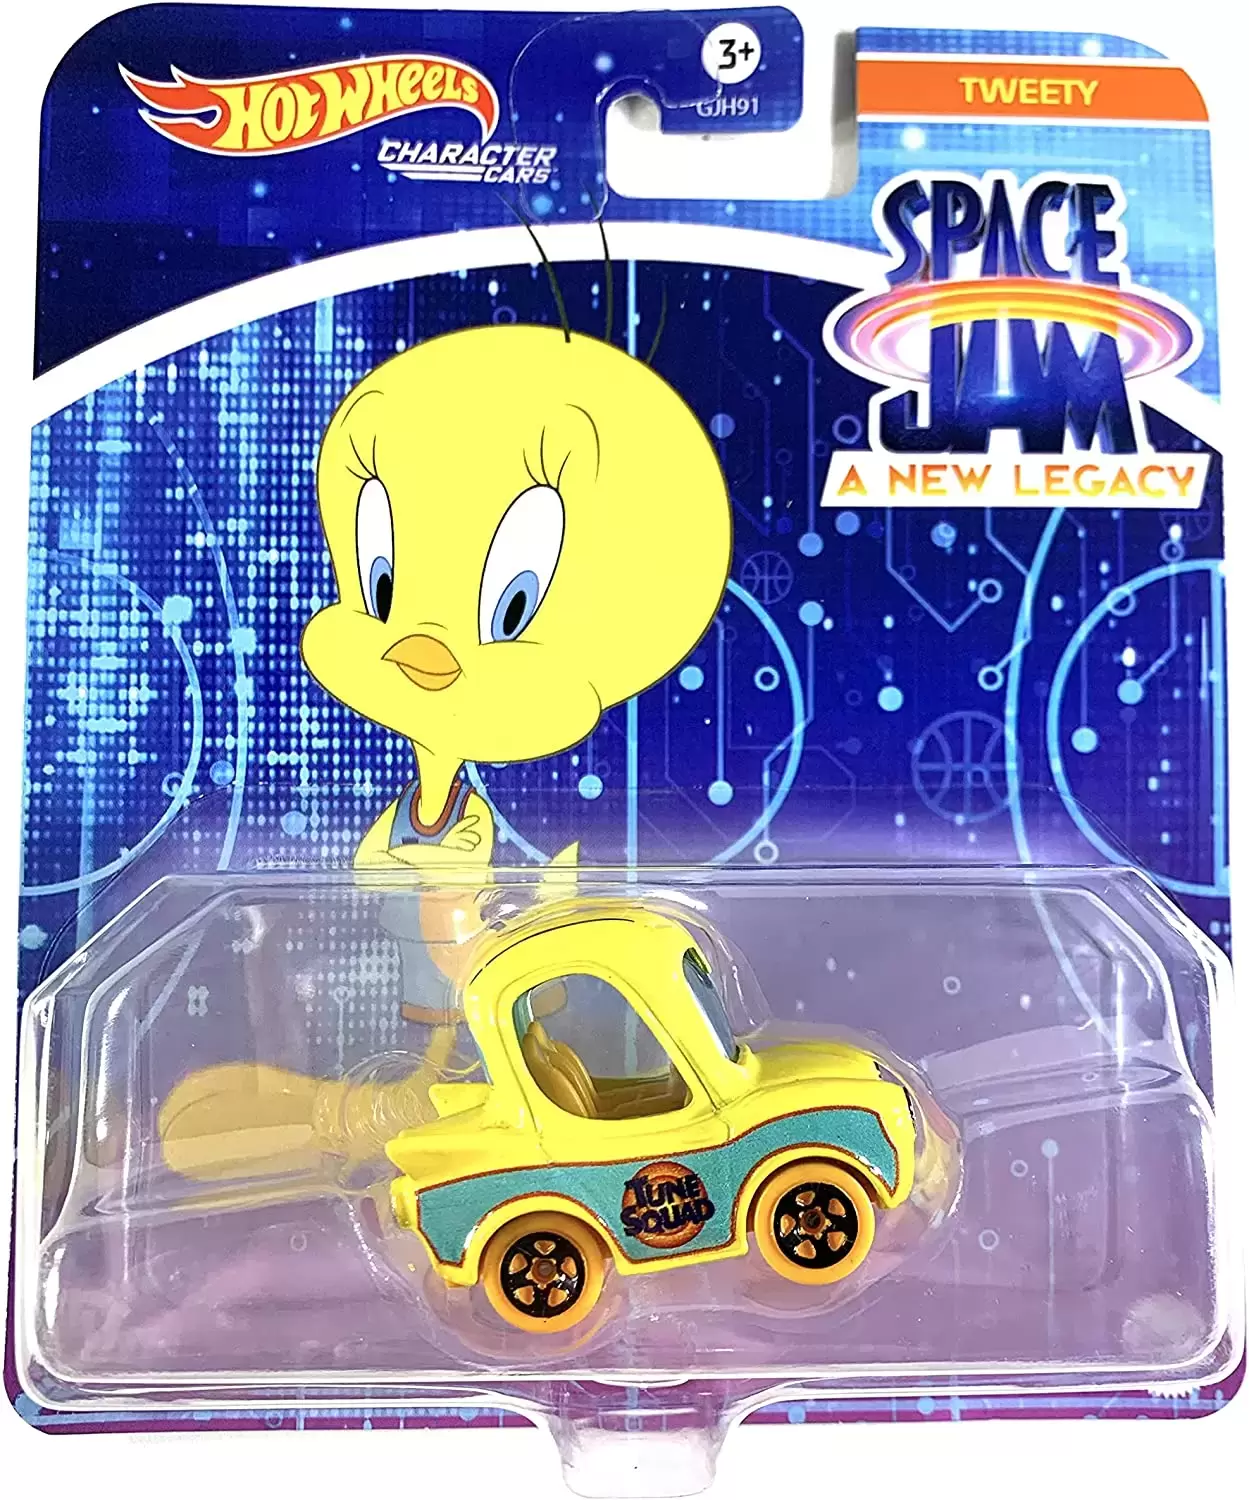 Hot Wheels Space Jam Character Cars - Tweety